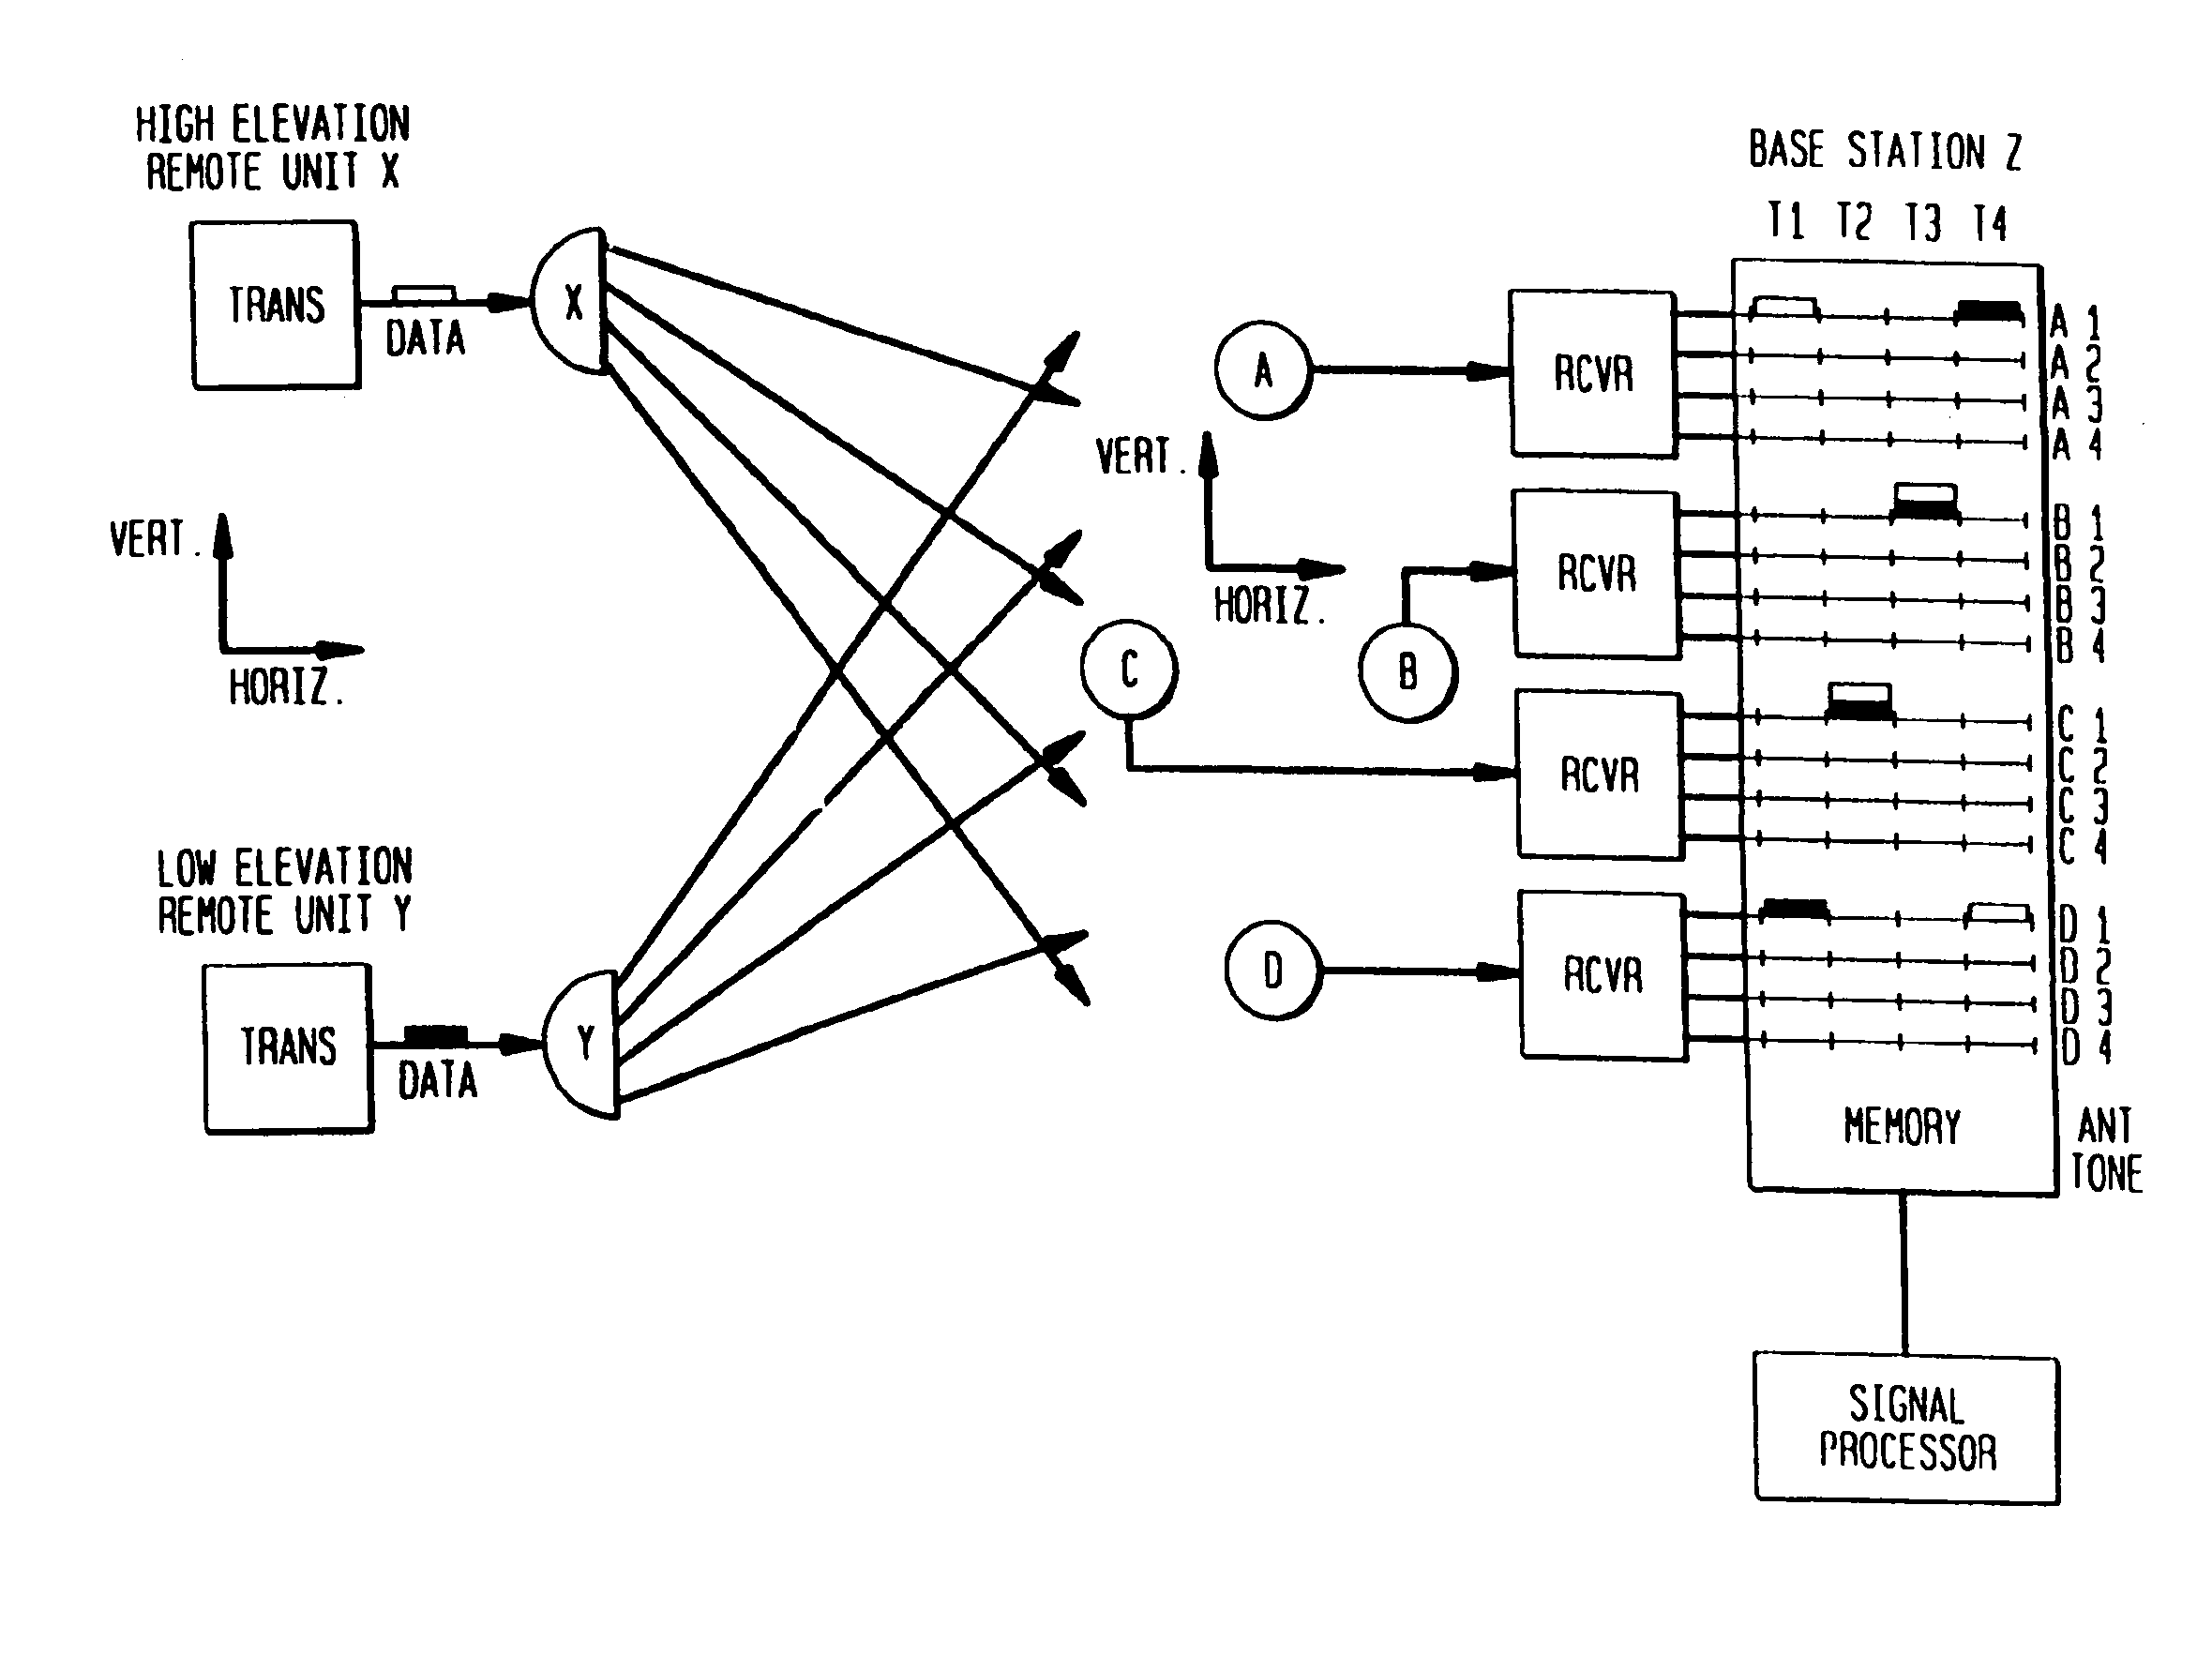 Vertical adaptive antenna array for a discrete multitone spread spectrum communication system